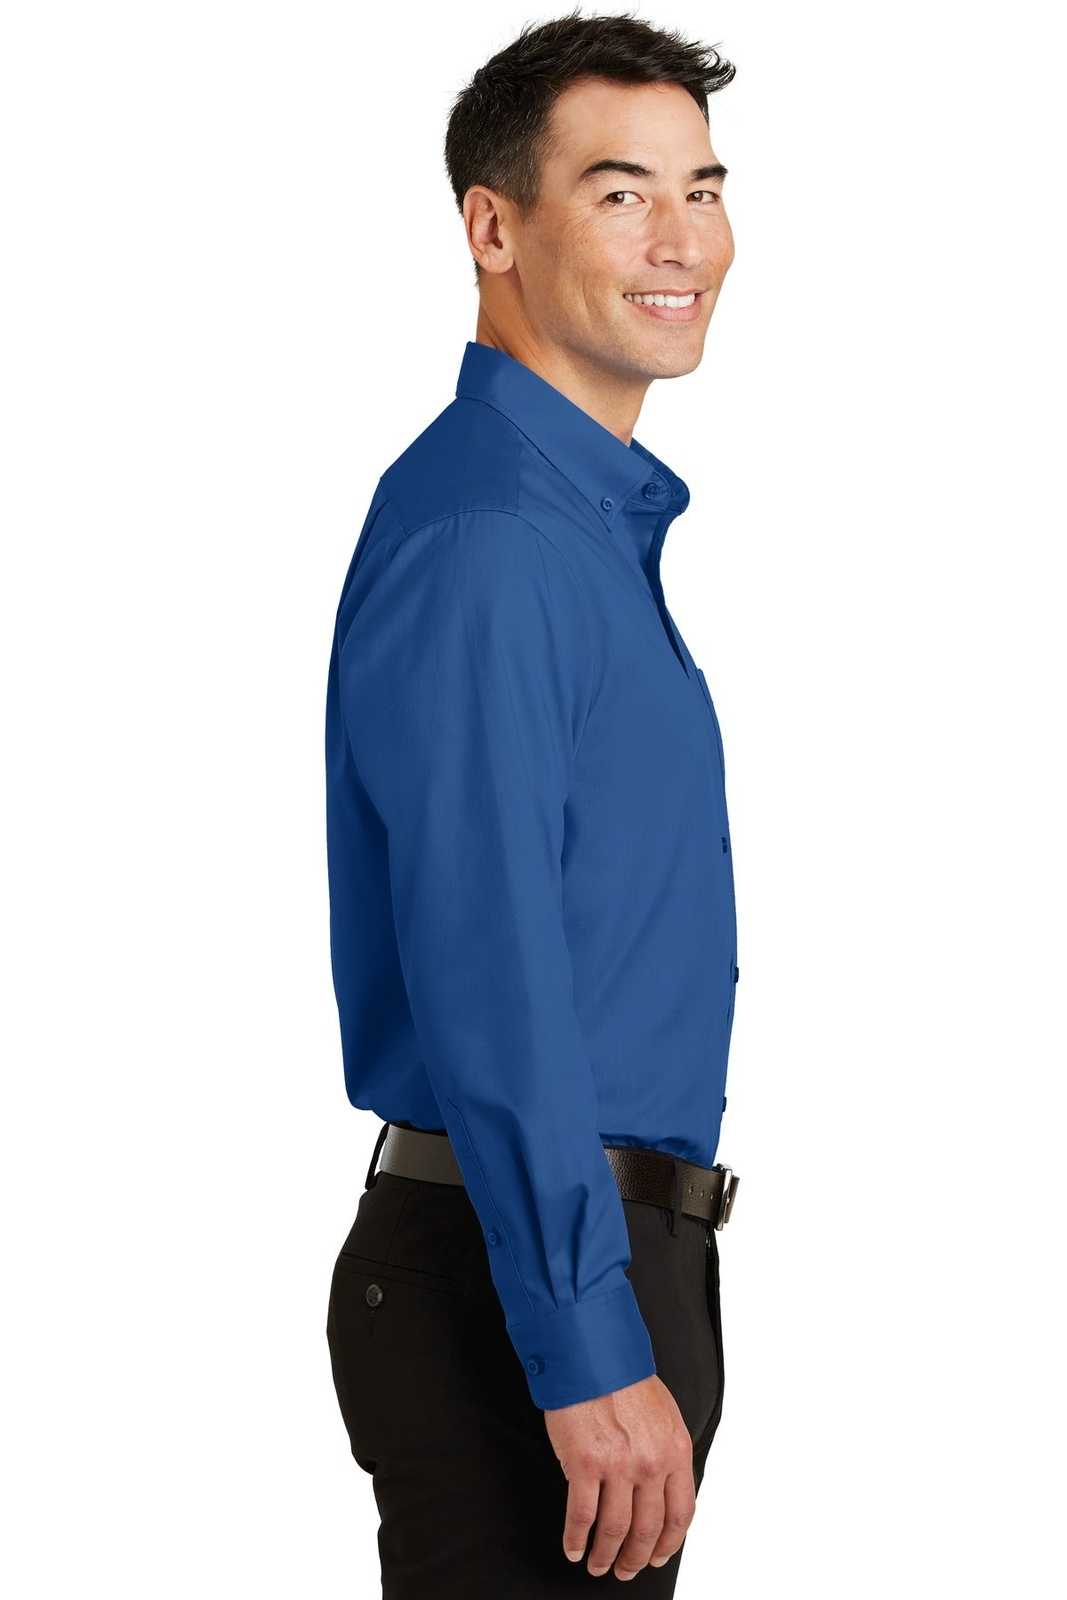 Port Authority S663 Superpro Twill Shirt - True Blue - HIT a Double - 3